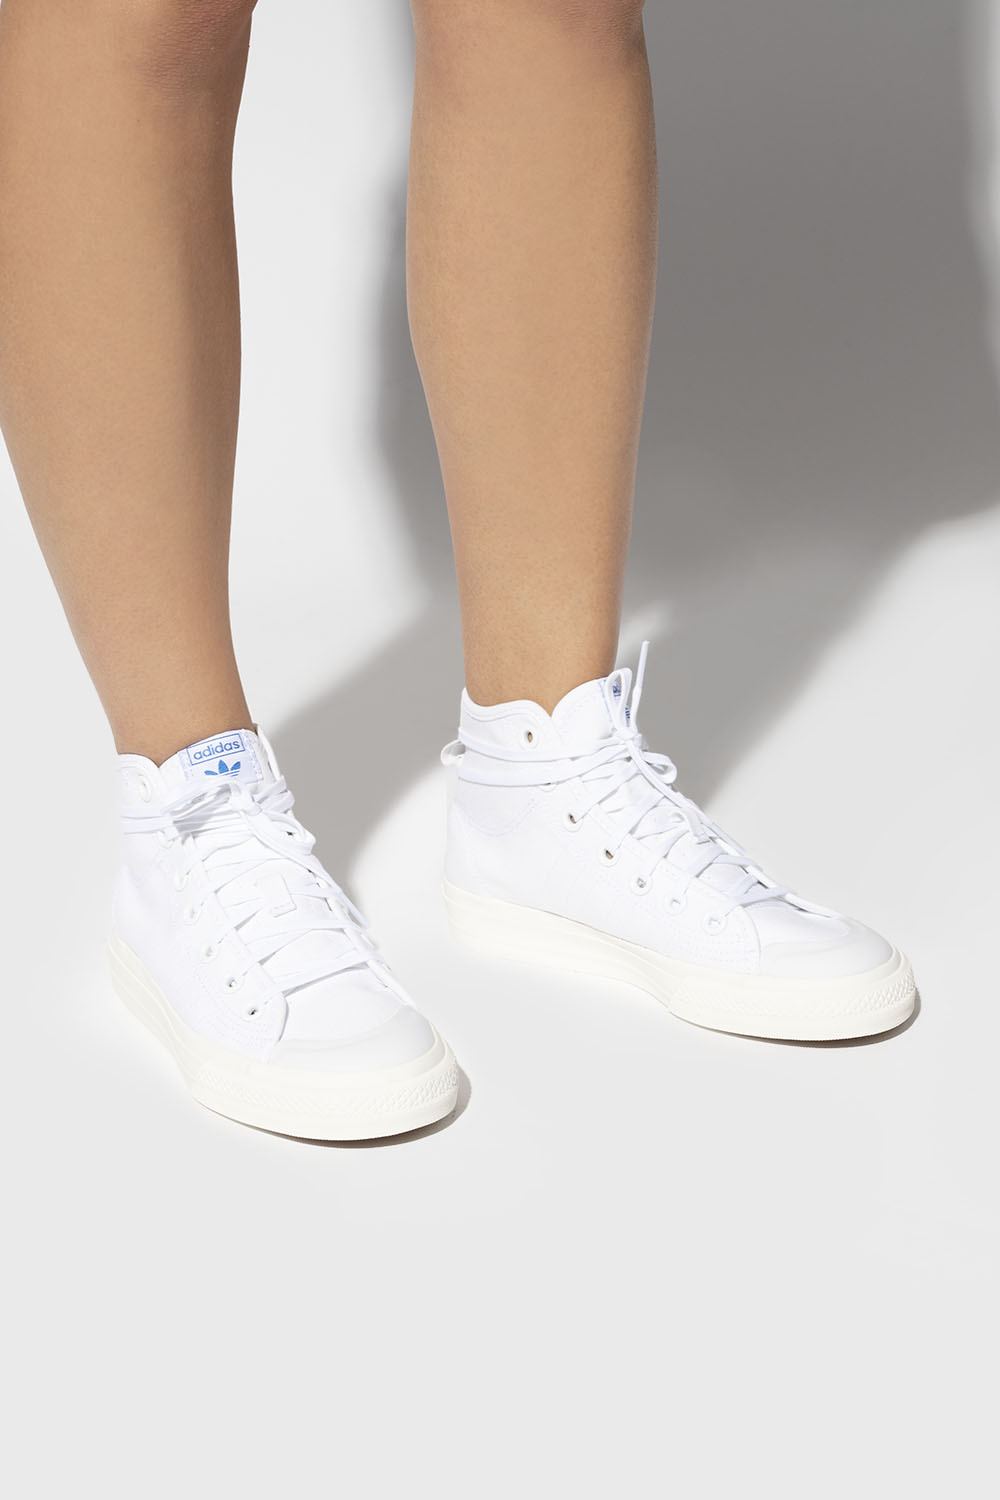 RF\' promo Hi \'Nizza high liter - 2 code - sneakers Finland IetpShops ADIDAS - adidas ebay Originals free top